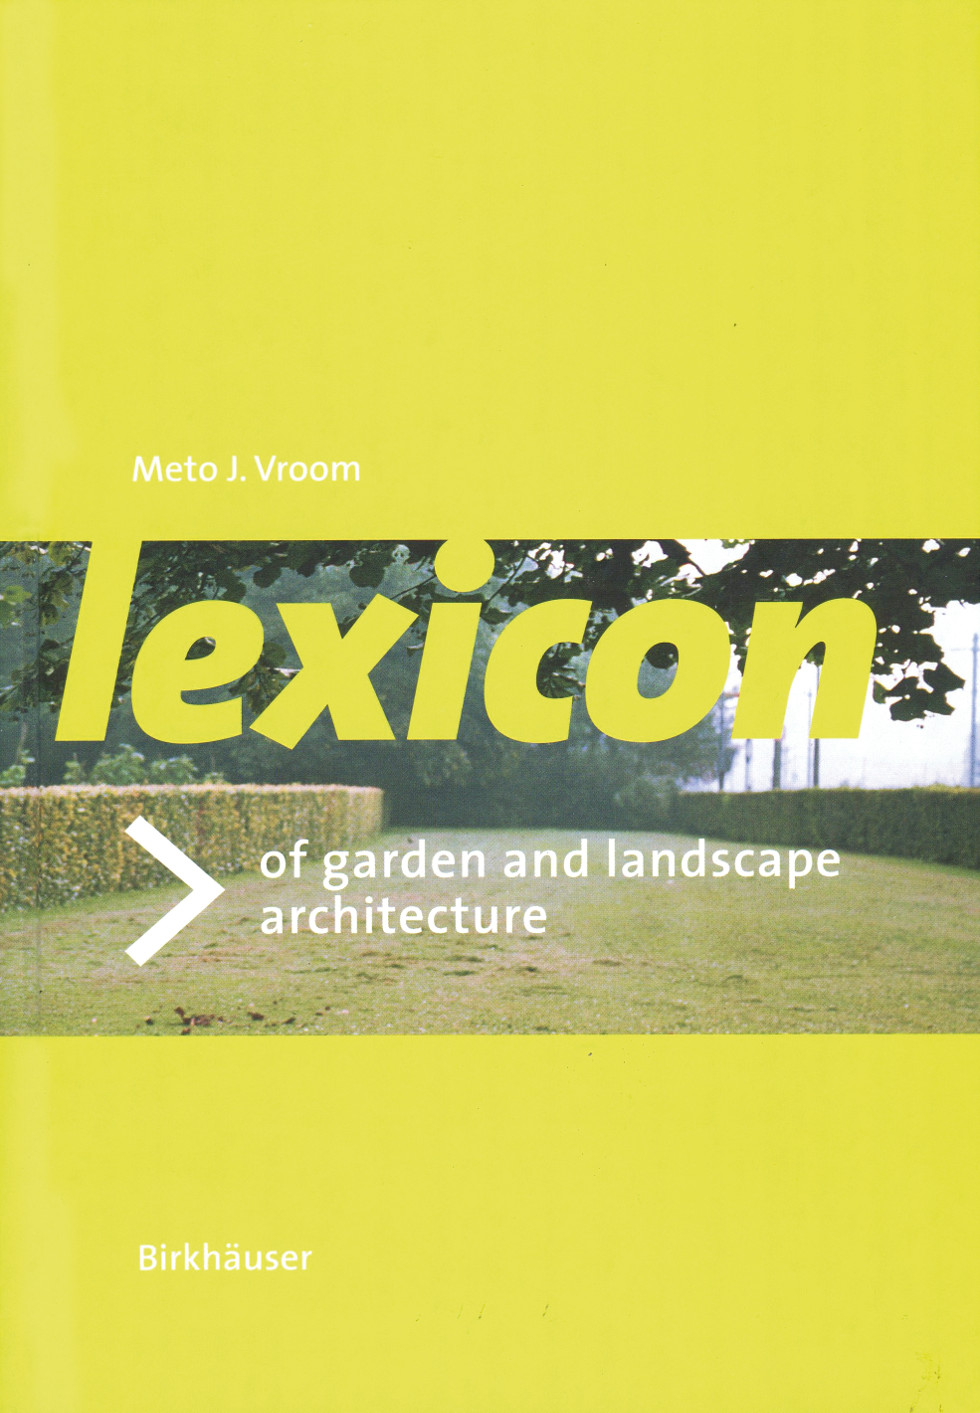 Meto J. Vroom, Lexicon of Garden and Landscape Architecture, Birkhäuser 2006 Architekturamurator